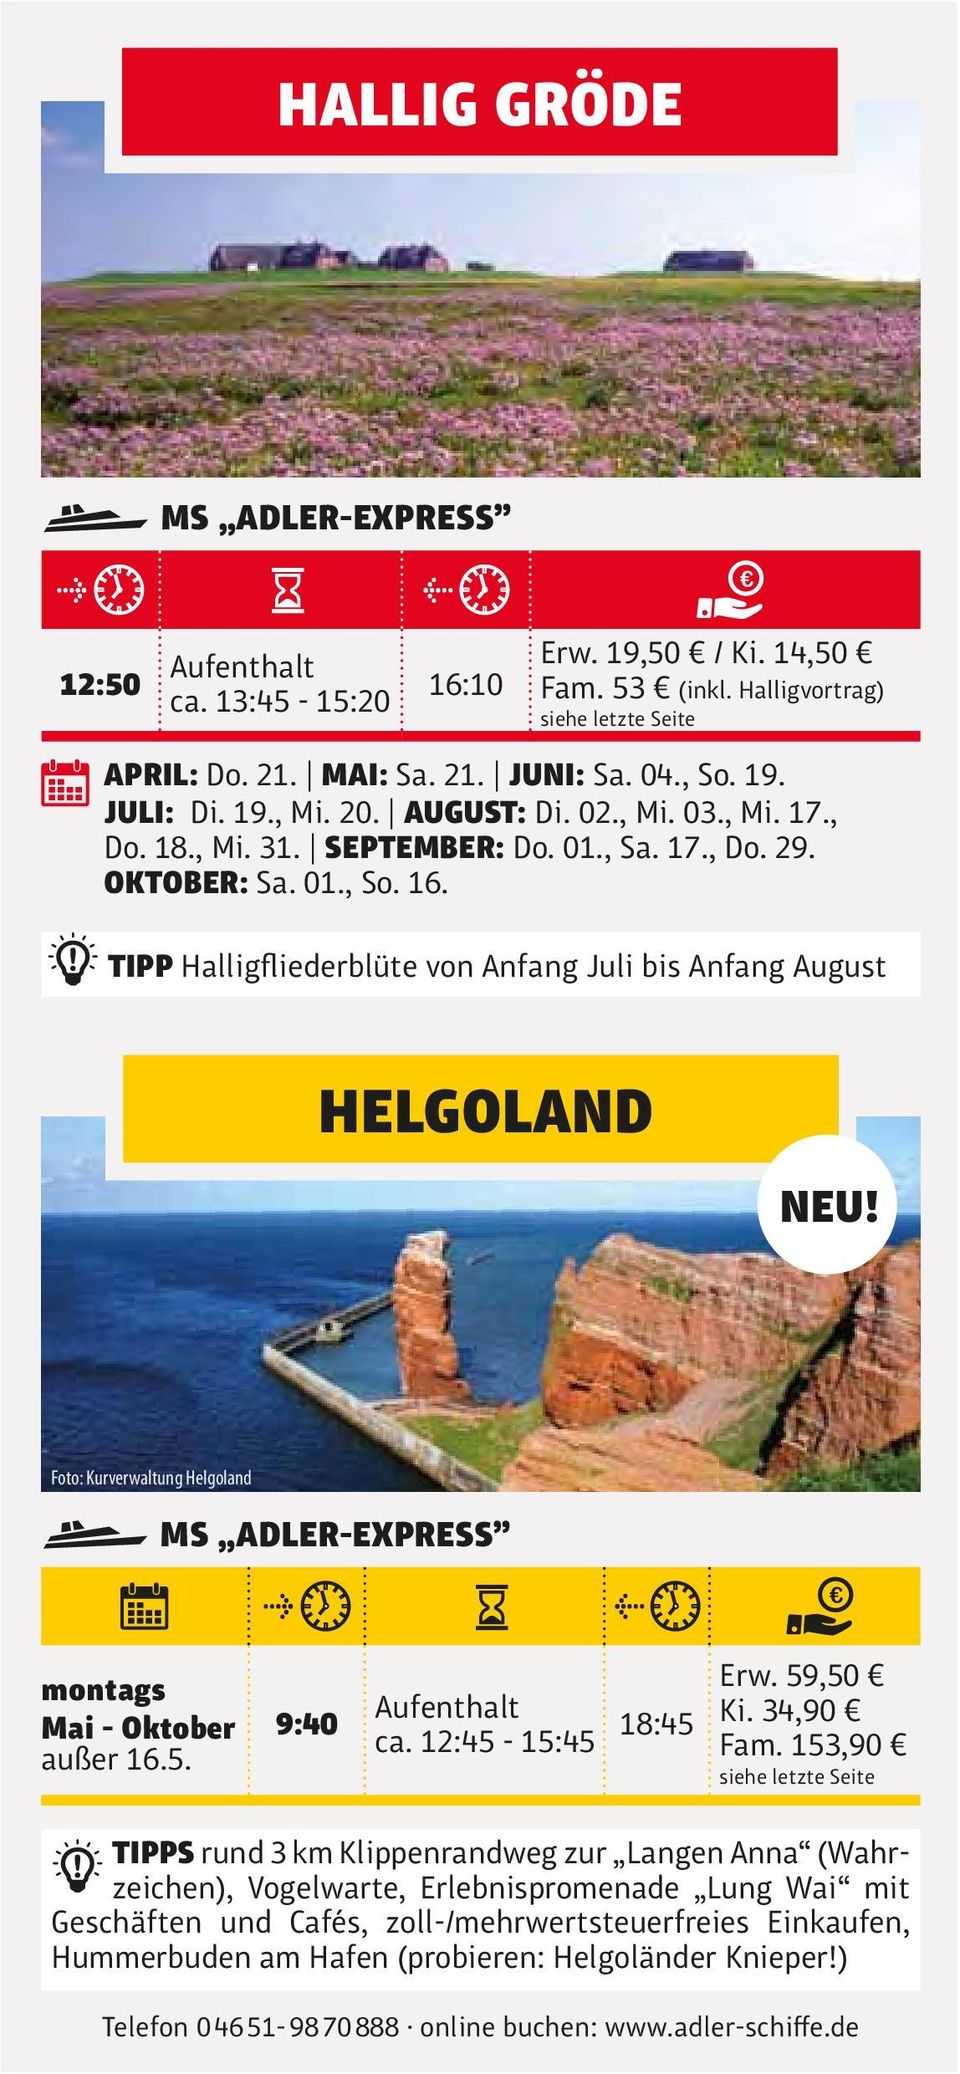 Foto: Kurverwaltung Helgoland montags Mai - Oktober außer 16.5. 9:40 Aufenthalt ca. 12:45-15:45 18:45 Erw. 59,50 Ki. 34,90 Fam.